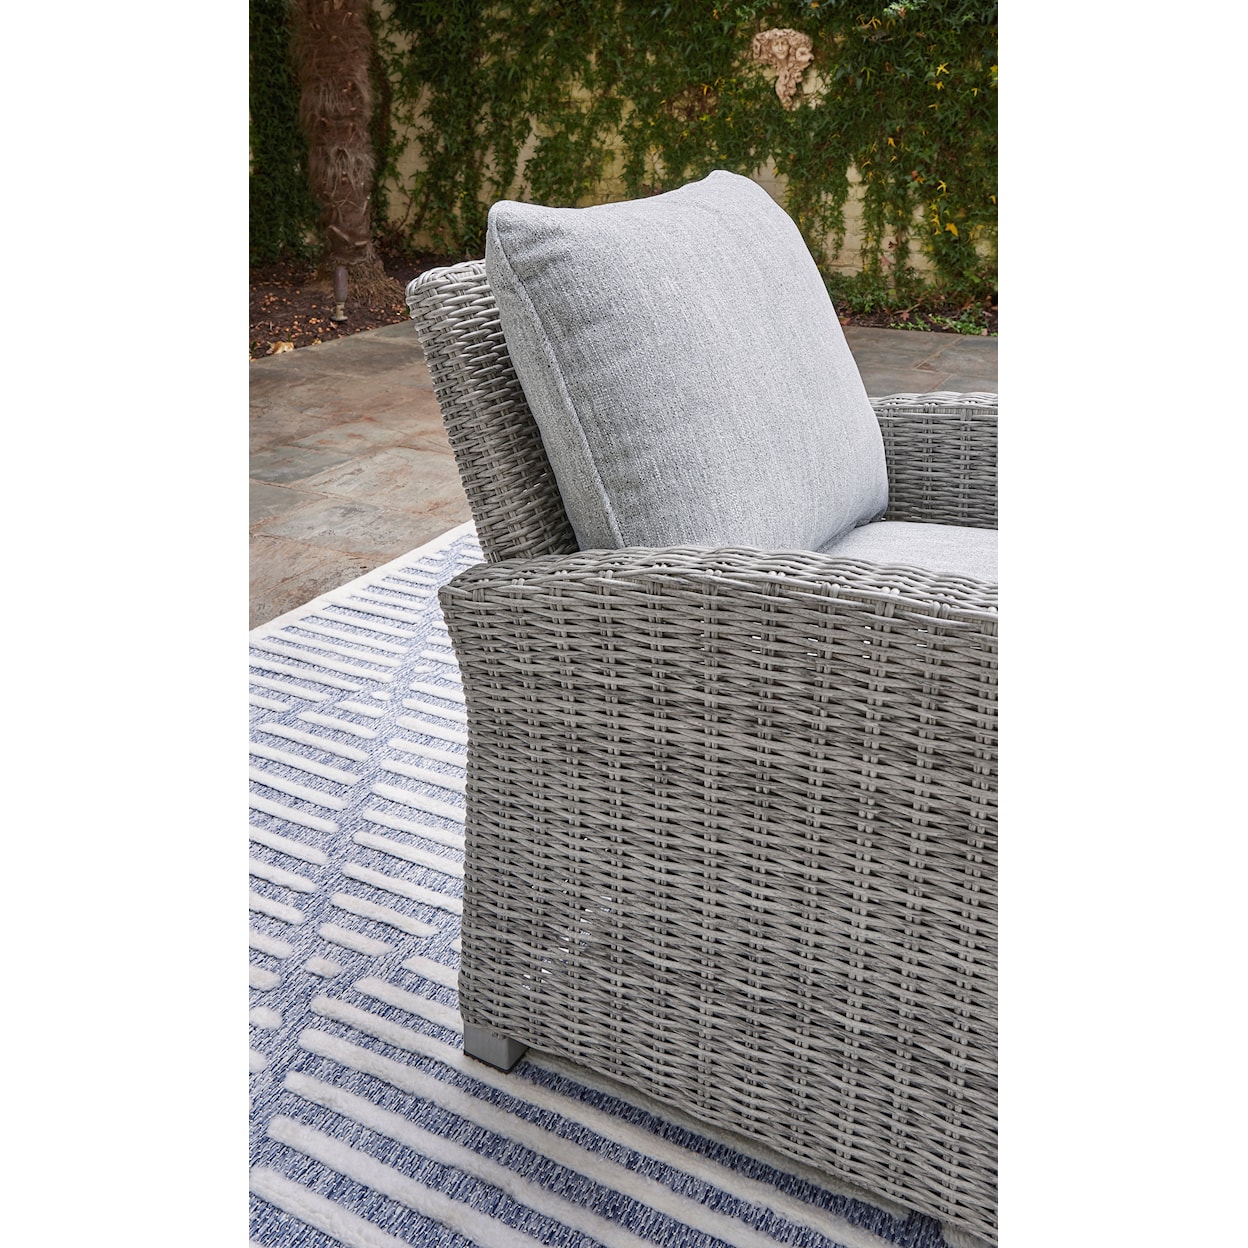 Belfort Select Lake Shore Outdoor Chair